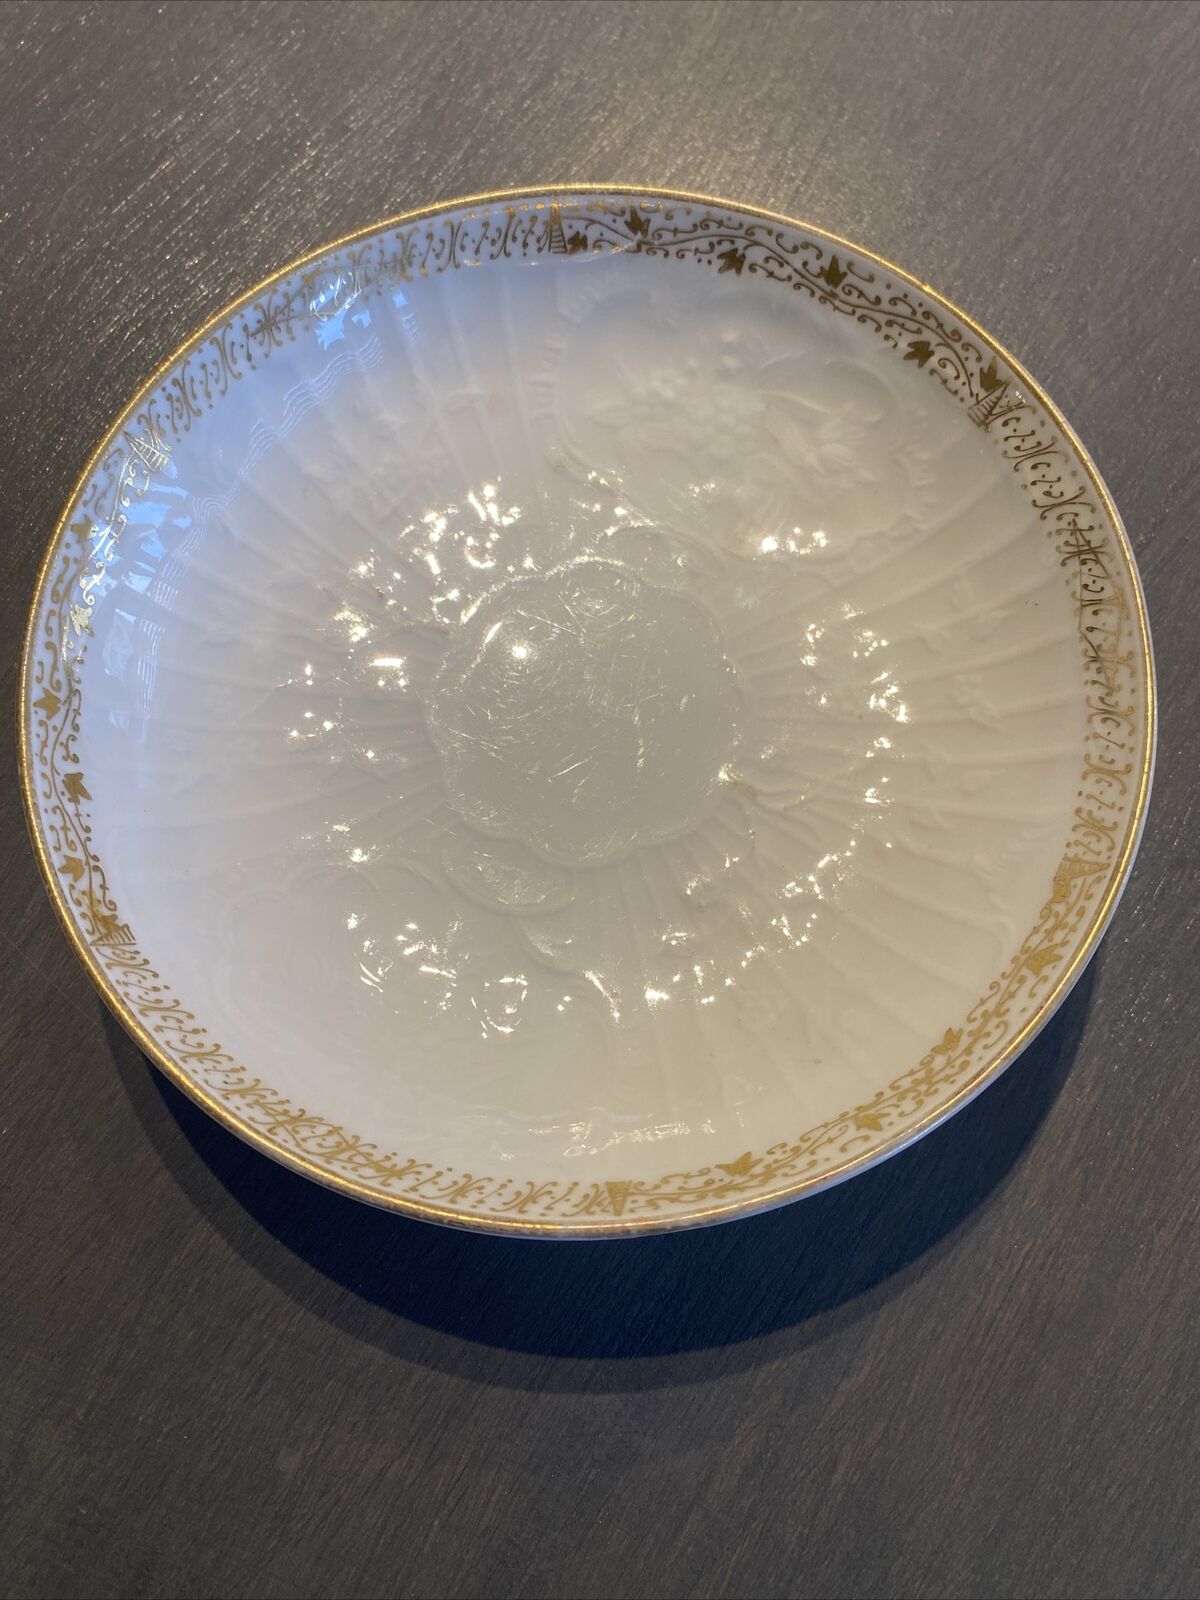 KPM Berlin Porcelain China Trinket or Candy Dish, White Gold Trim 5.5”